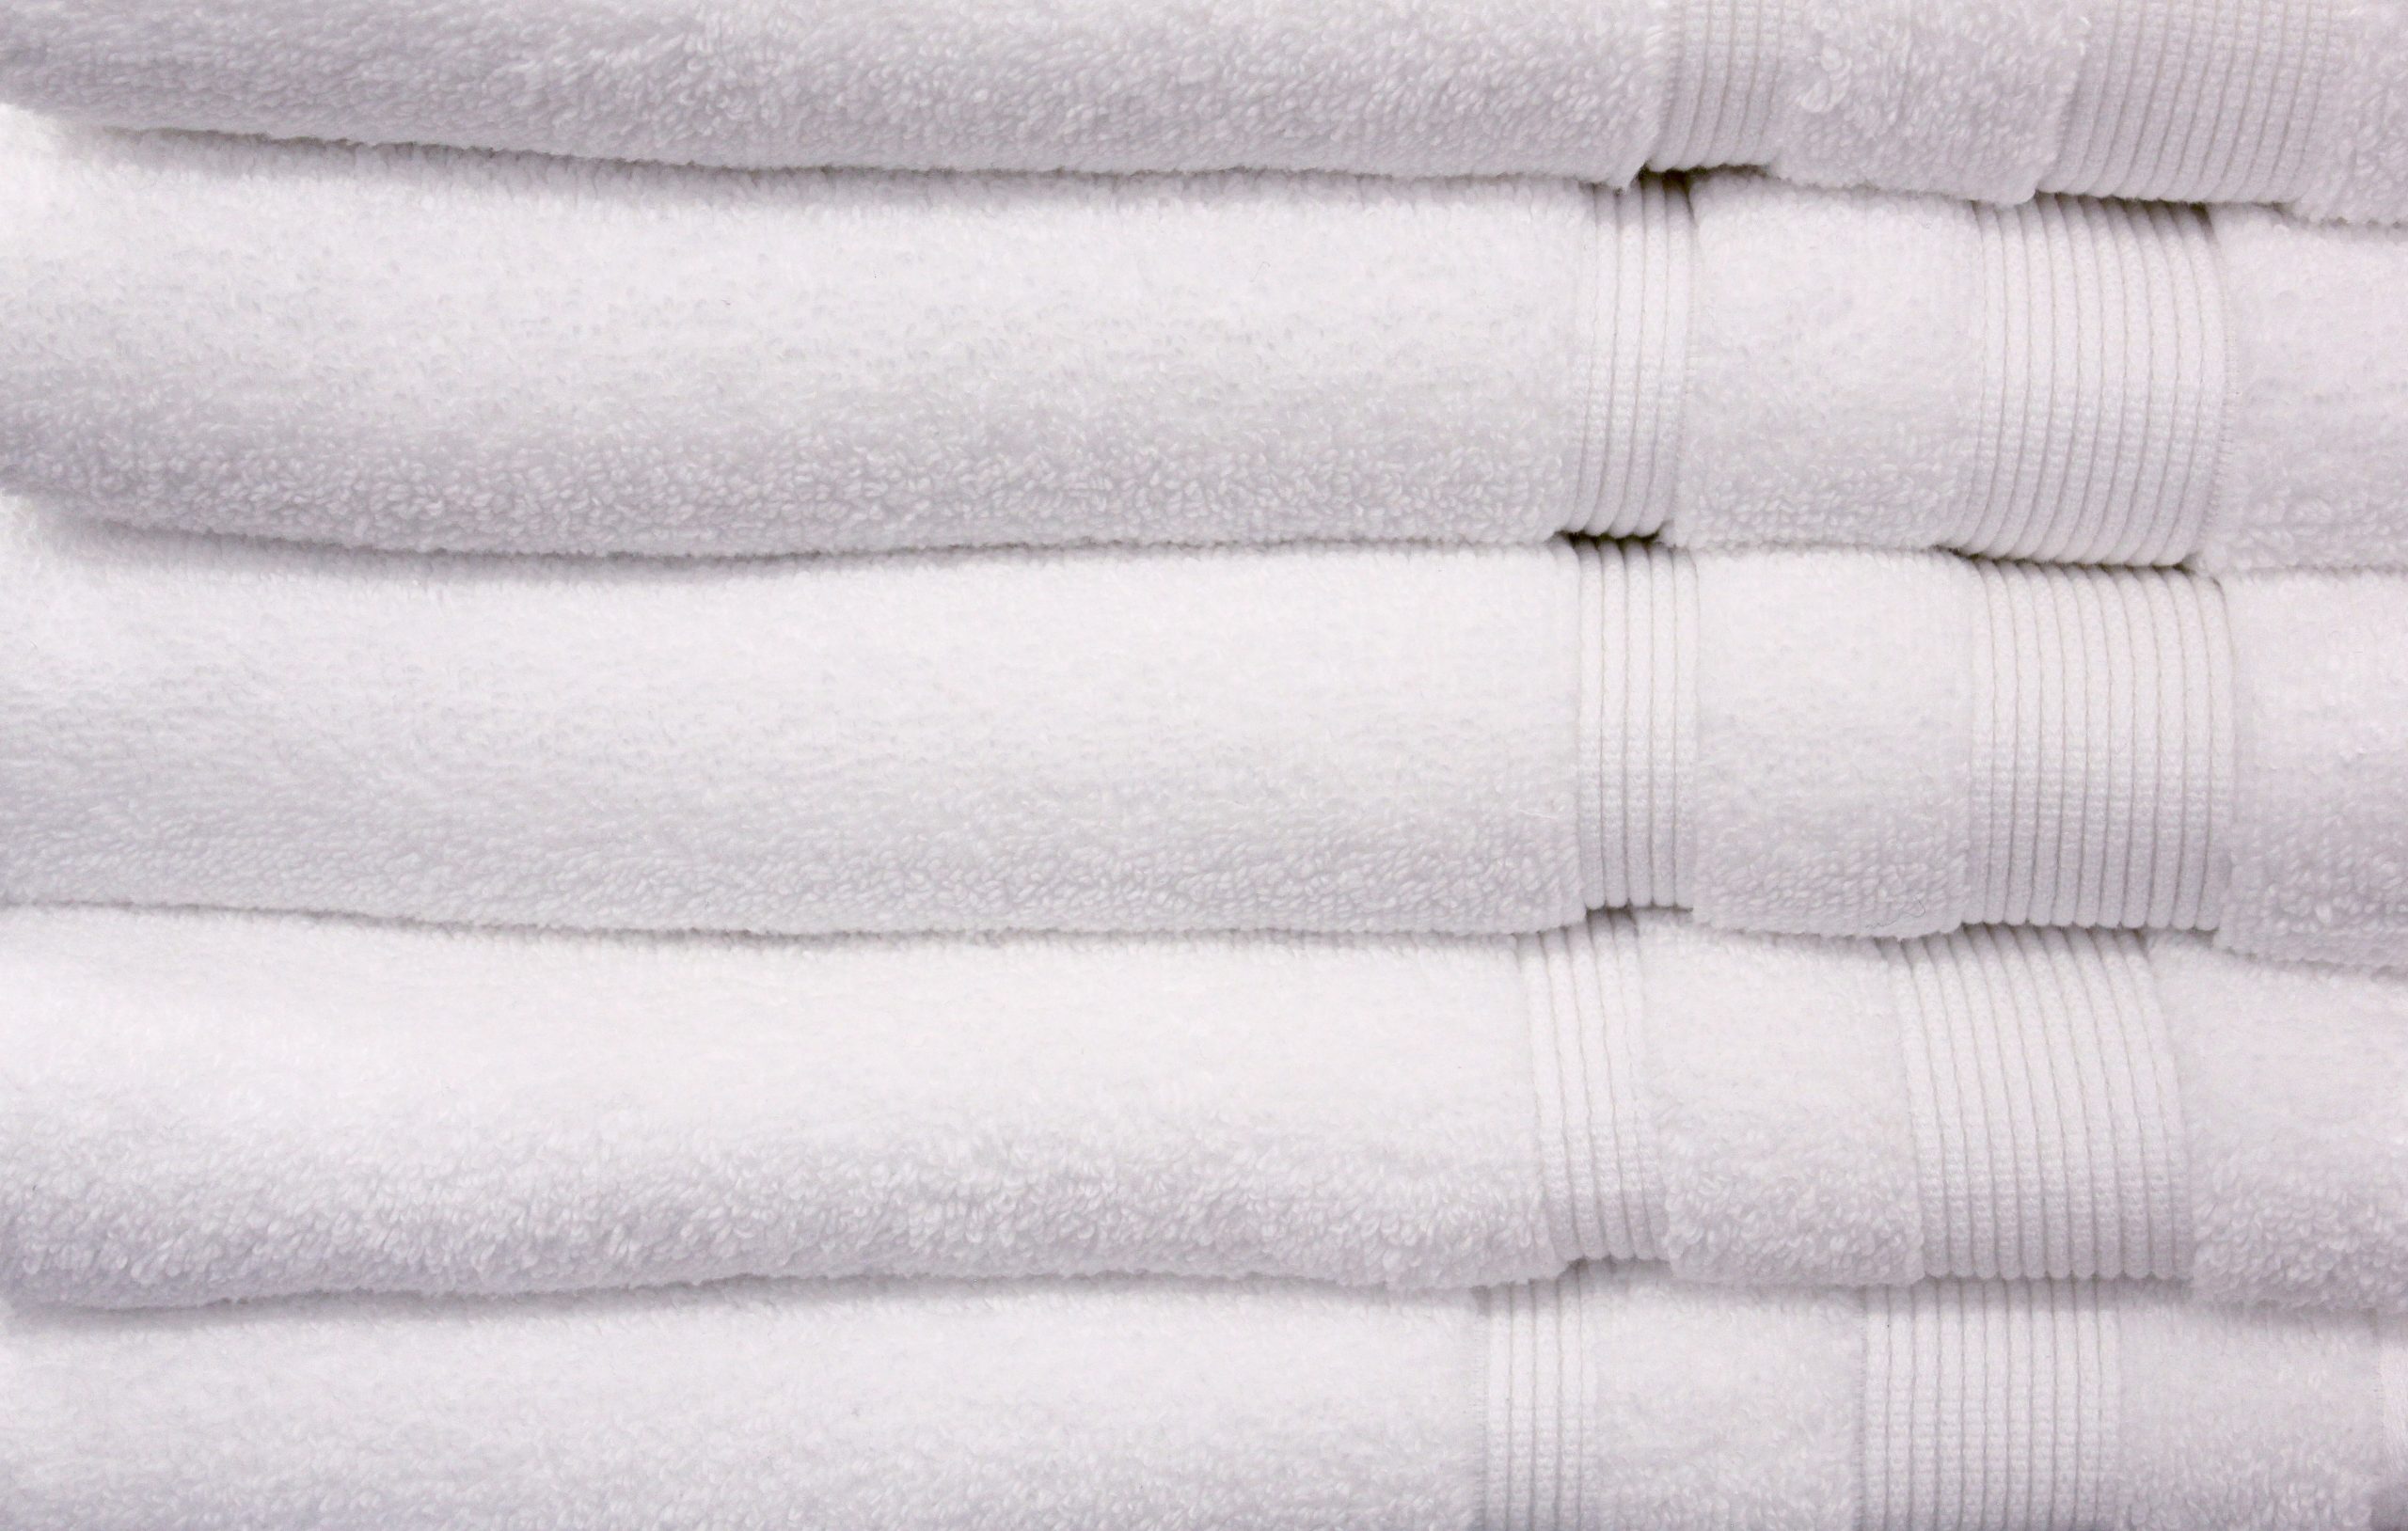 https://www.wilkinslinen.com/website/wp-content/uploads/2021/10/hand-towels-scaled.jpg